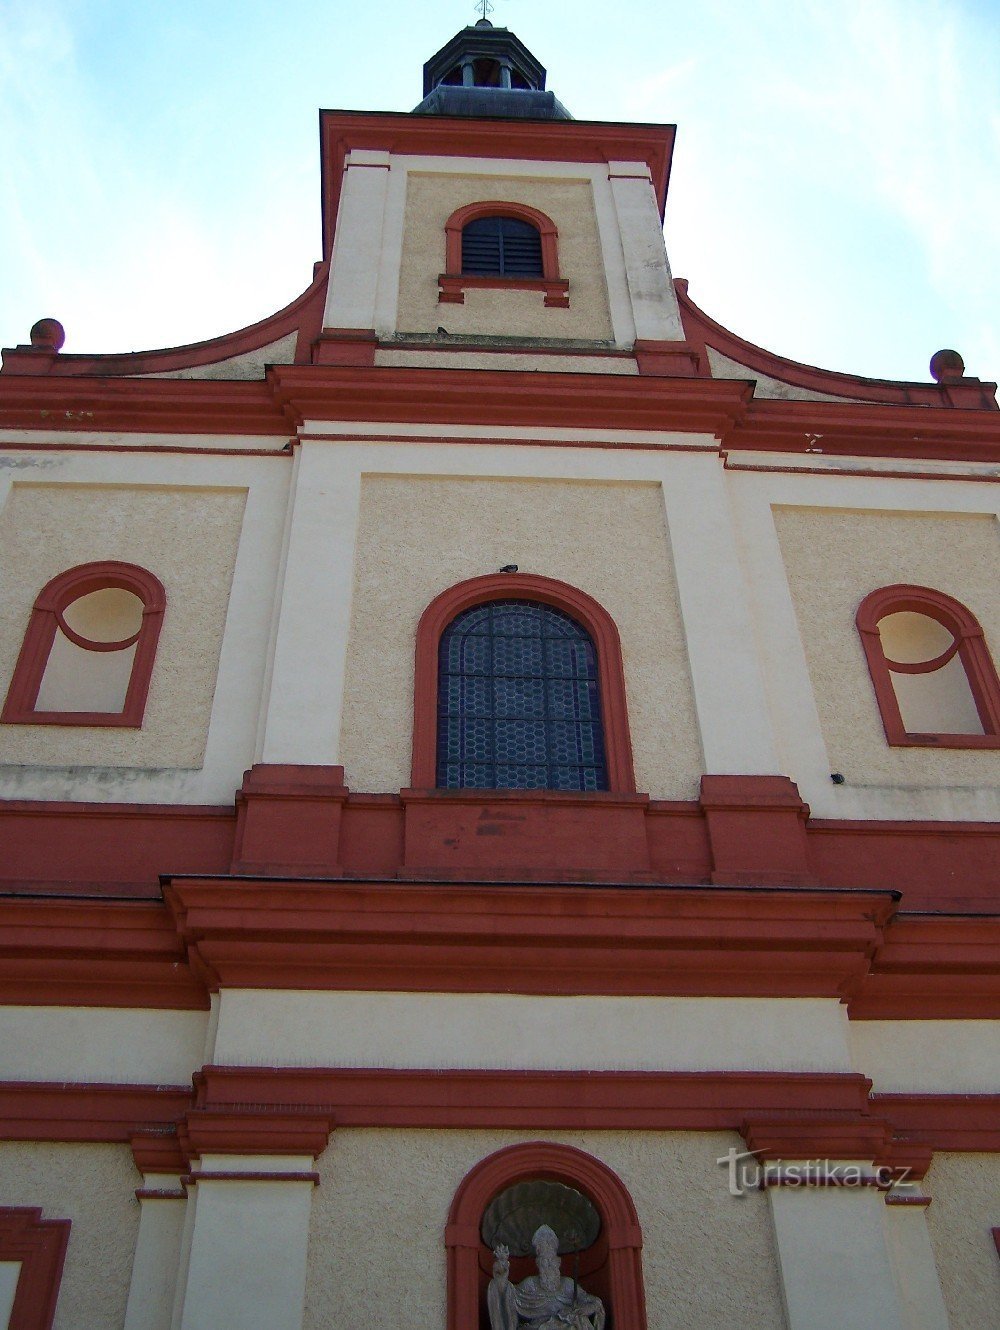 Vrchlabí - fachada de la iglesia del monasterio de St. Agustín